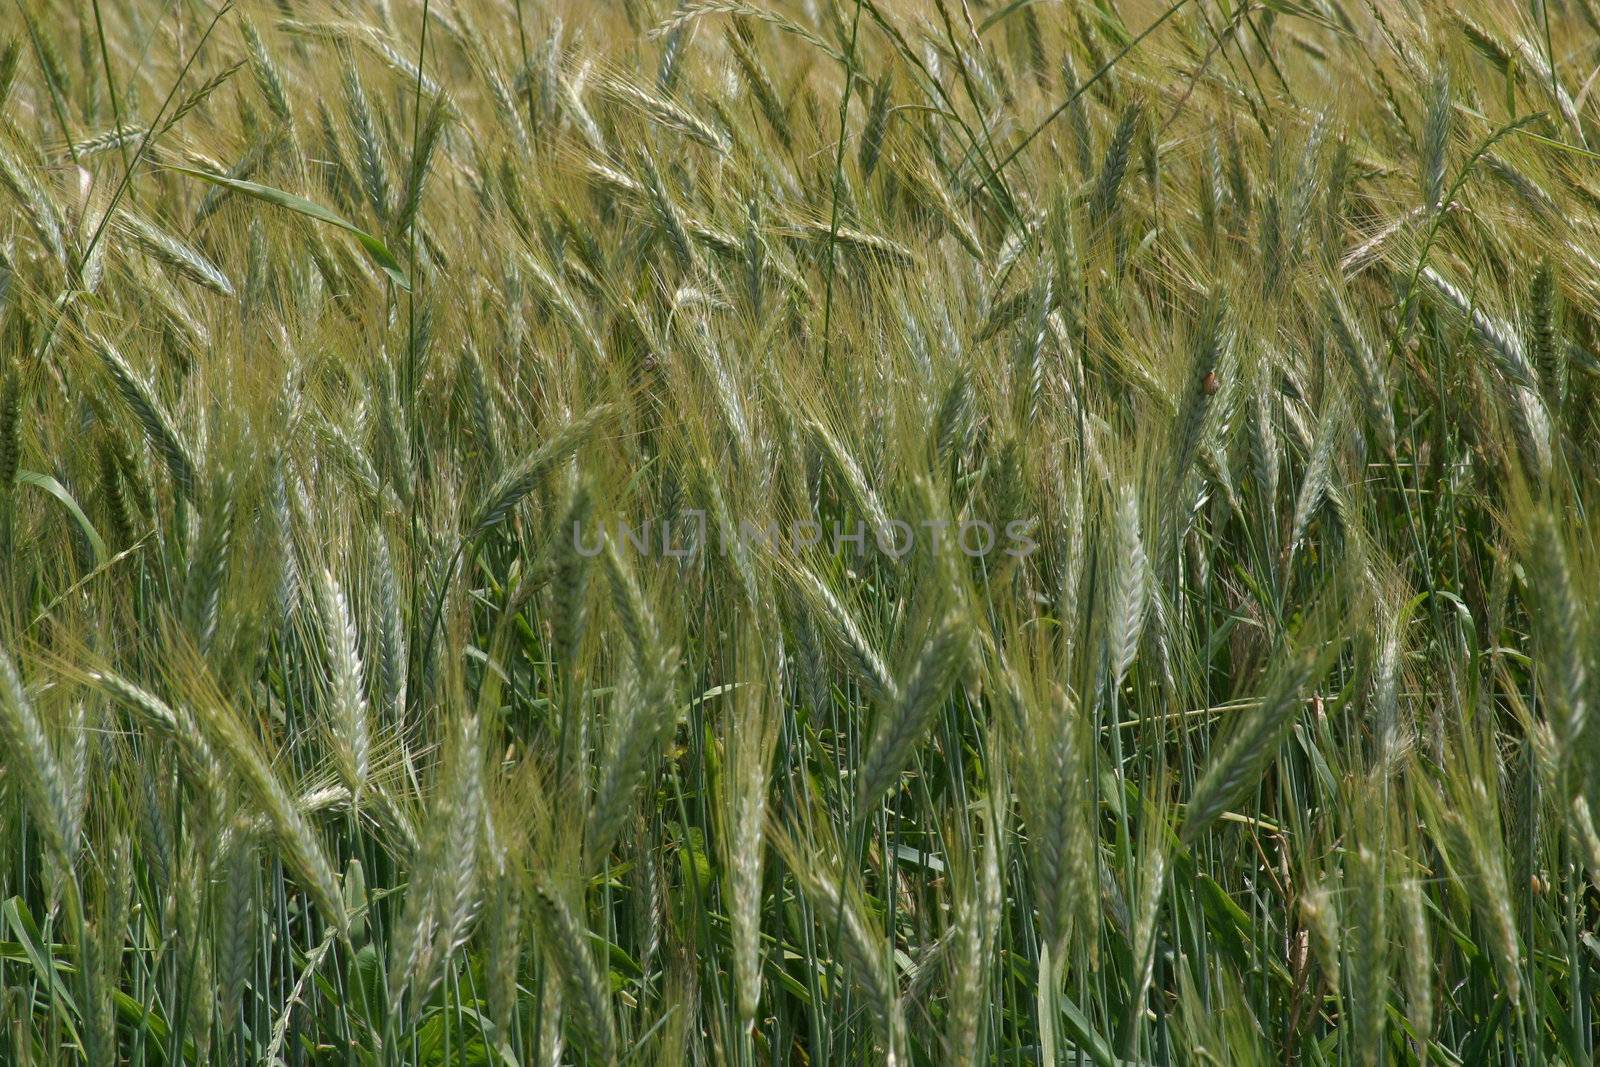 Photo of wheat growing in field, Slavonia, Croatia